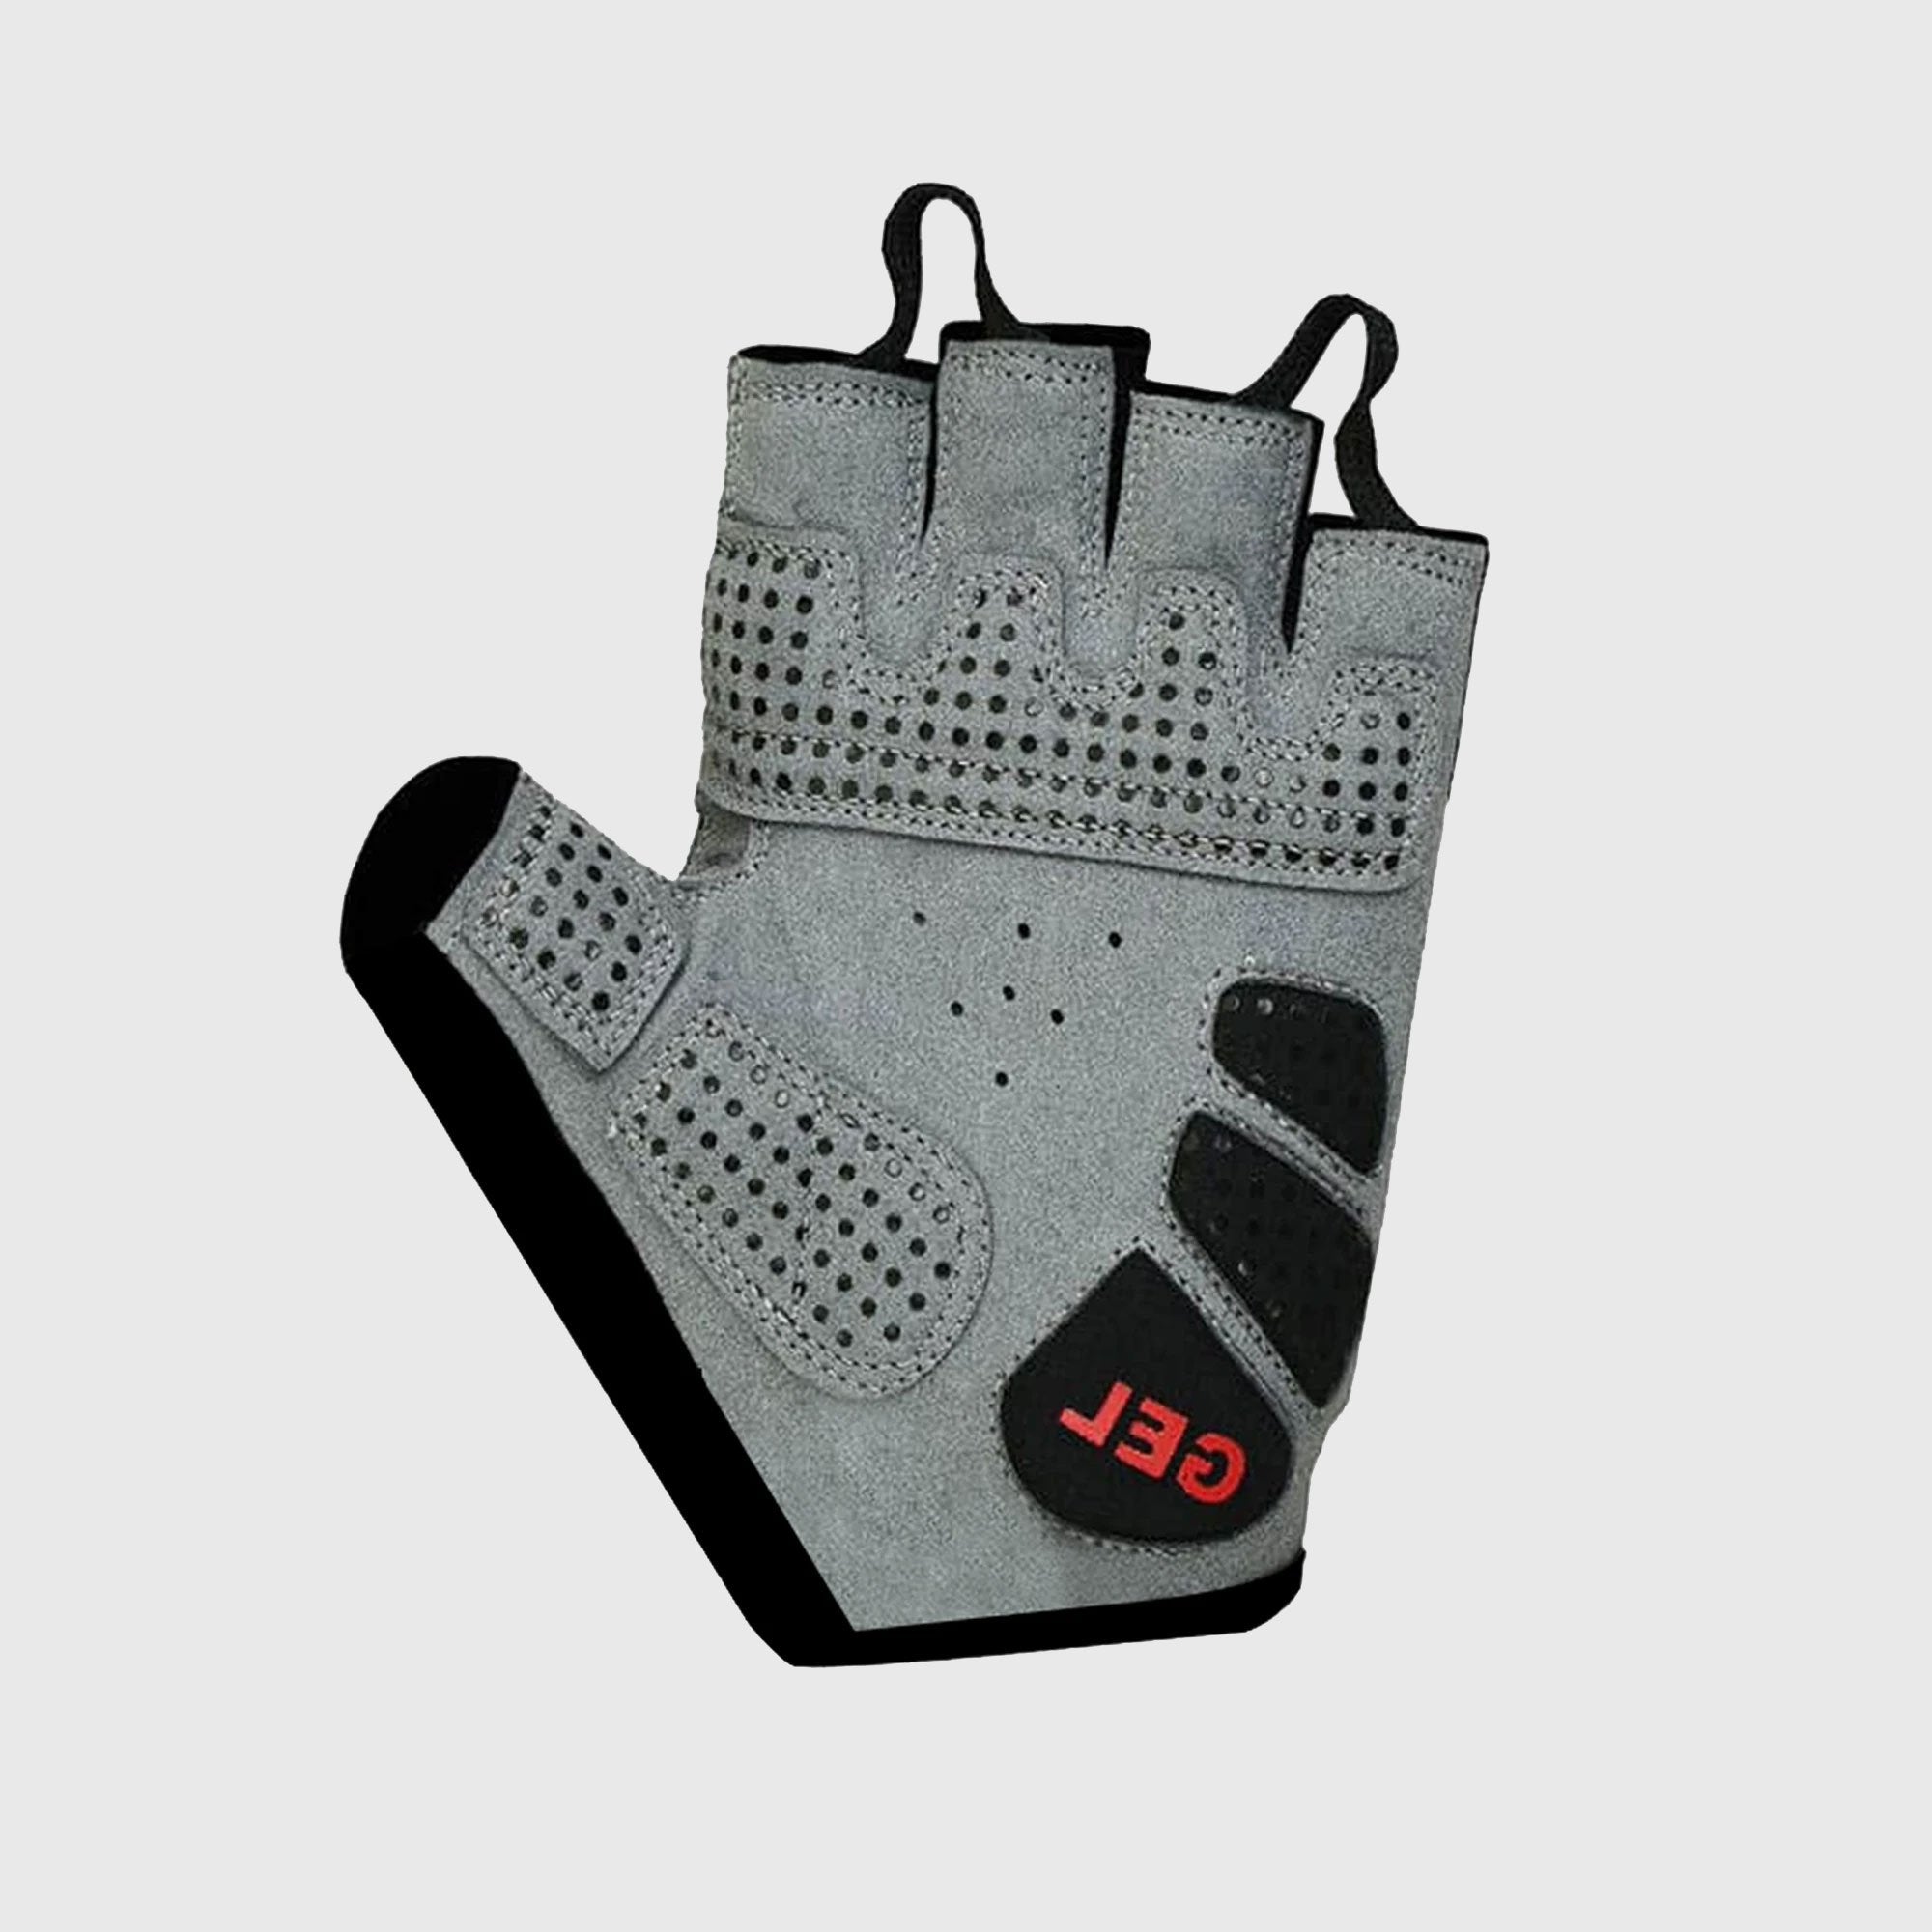 Fdx Black & Yellow Short Finger Cycling Gloves for Summer MTB Road Bike fingerless, anti slip & Breathable - Signature